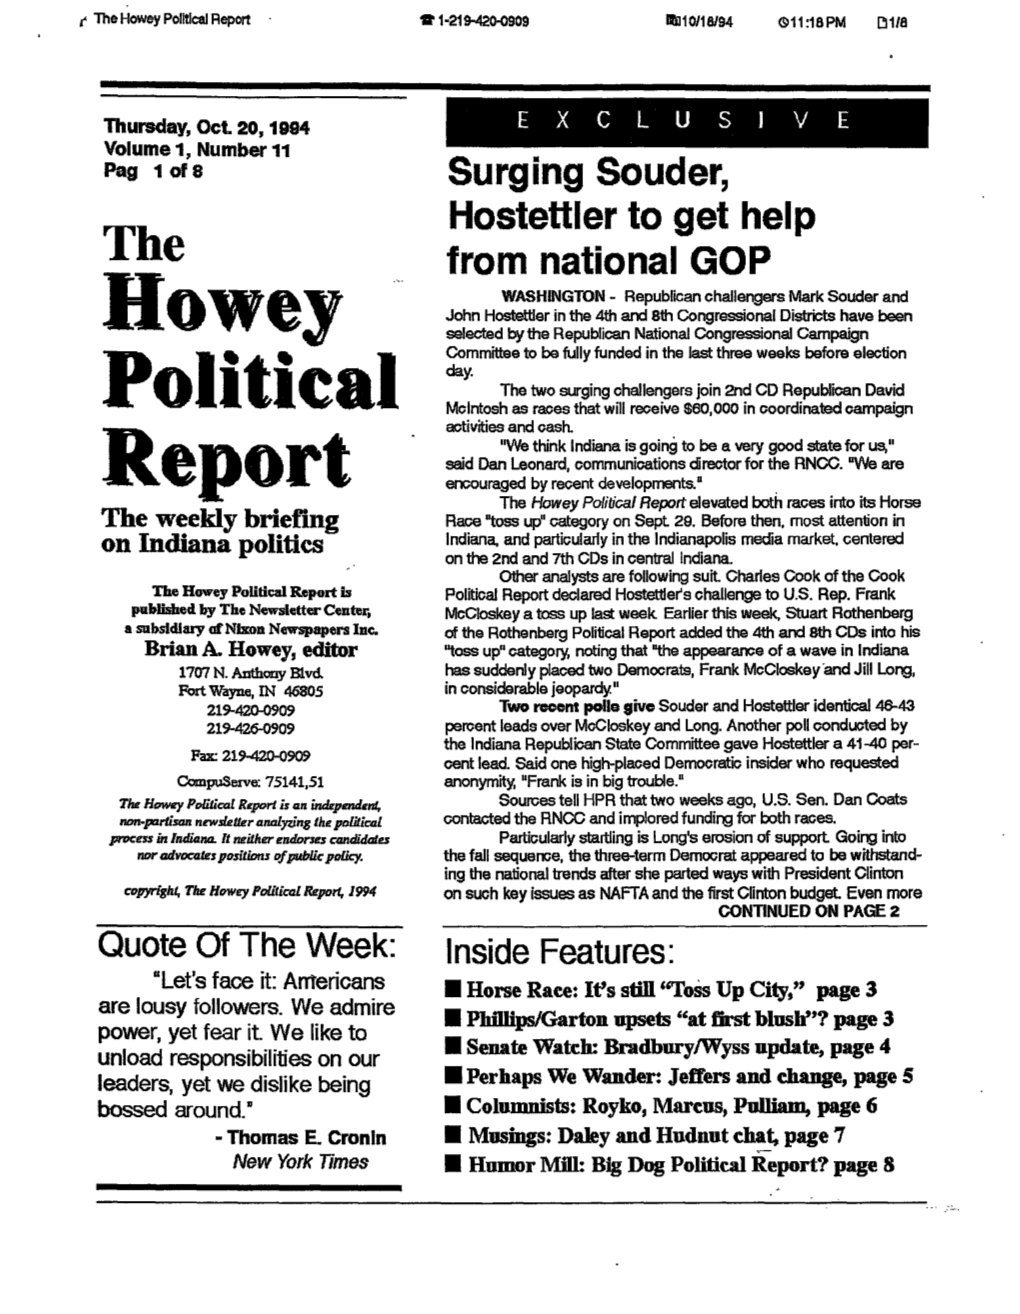 Bowey Political Report